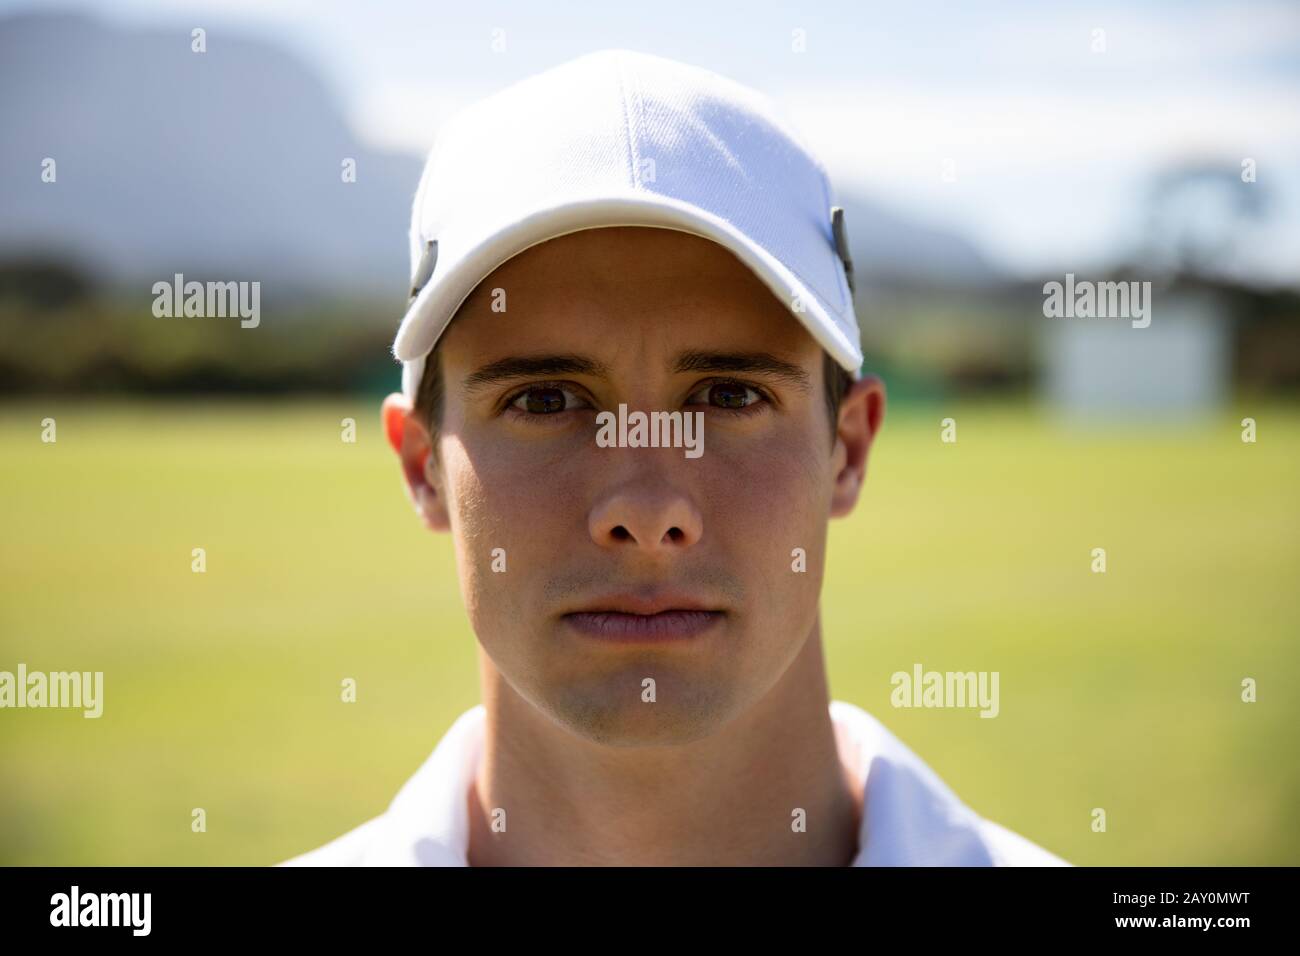 Cricket player looking at the camera Stock Photo